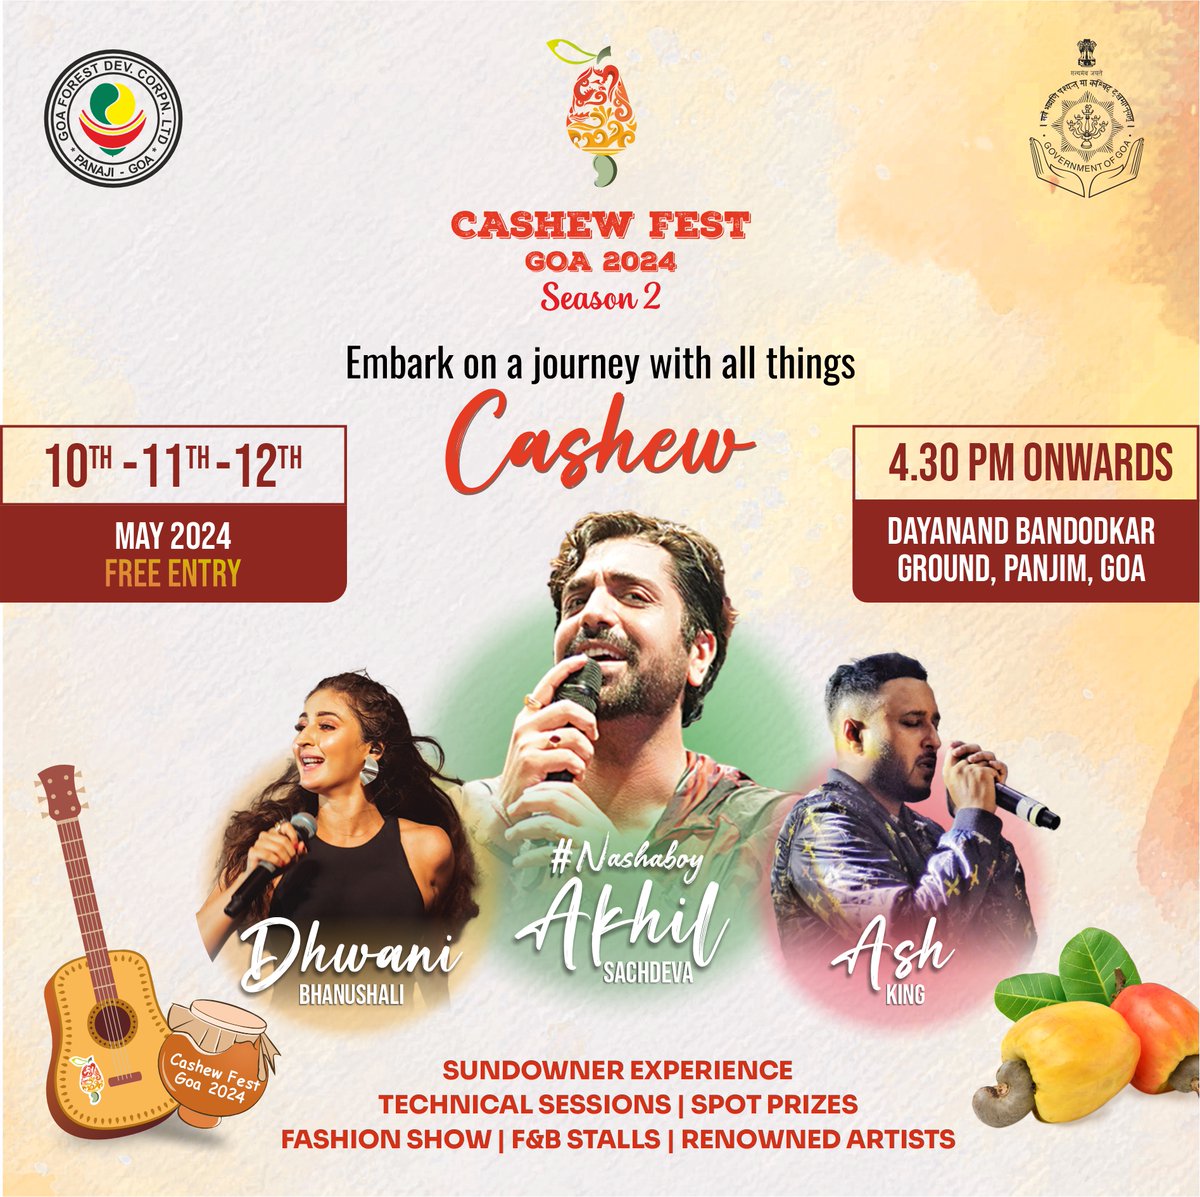 Join us at Cashew Fest Goa 2024 Season 2 with some live performances by Dhvani Bhanushali, Akhil Sachdeva, and Ash King!

#CashewFestGoa #DhvaniBhanushali #AkhilSachdeva #AshKing #LiveMusic #FreeEntry #DanceAllNight #goanewslink